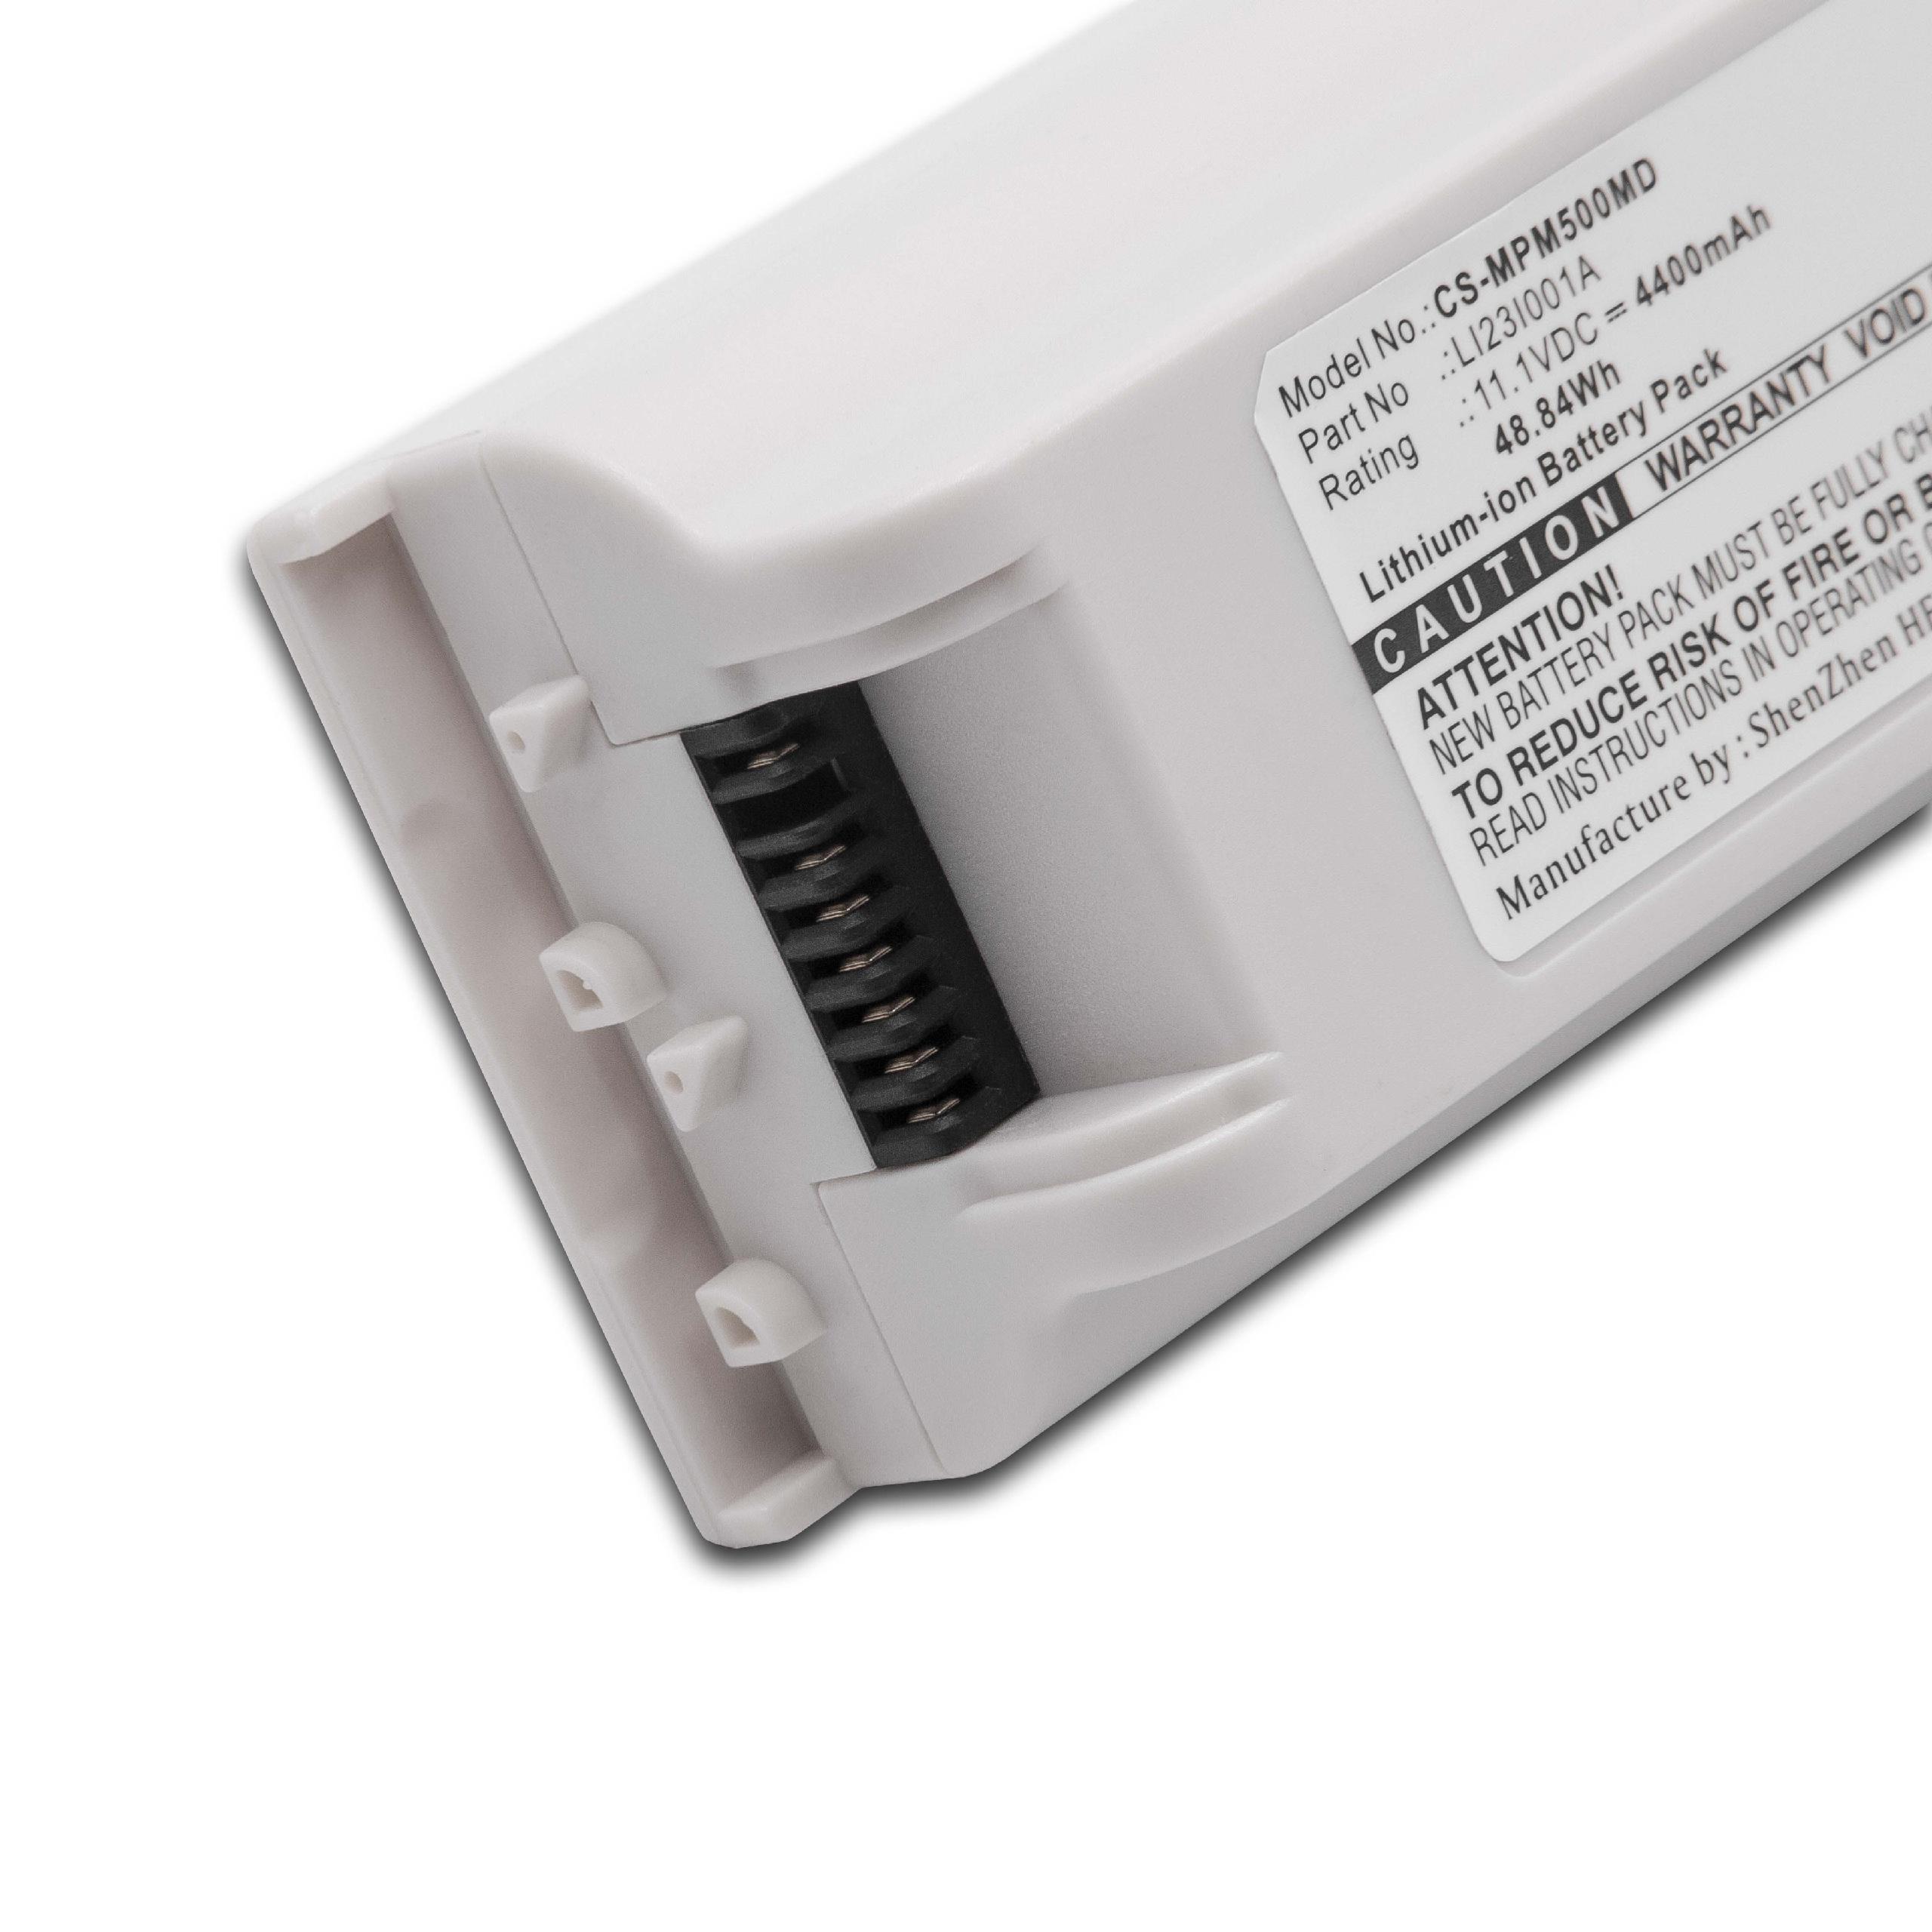 Batterie remplace Mindray LI23I001A, 2108-30-66176 pour appareil médical - 4400mAh 11,1V Li-ion